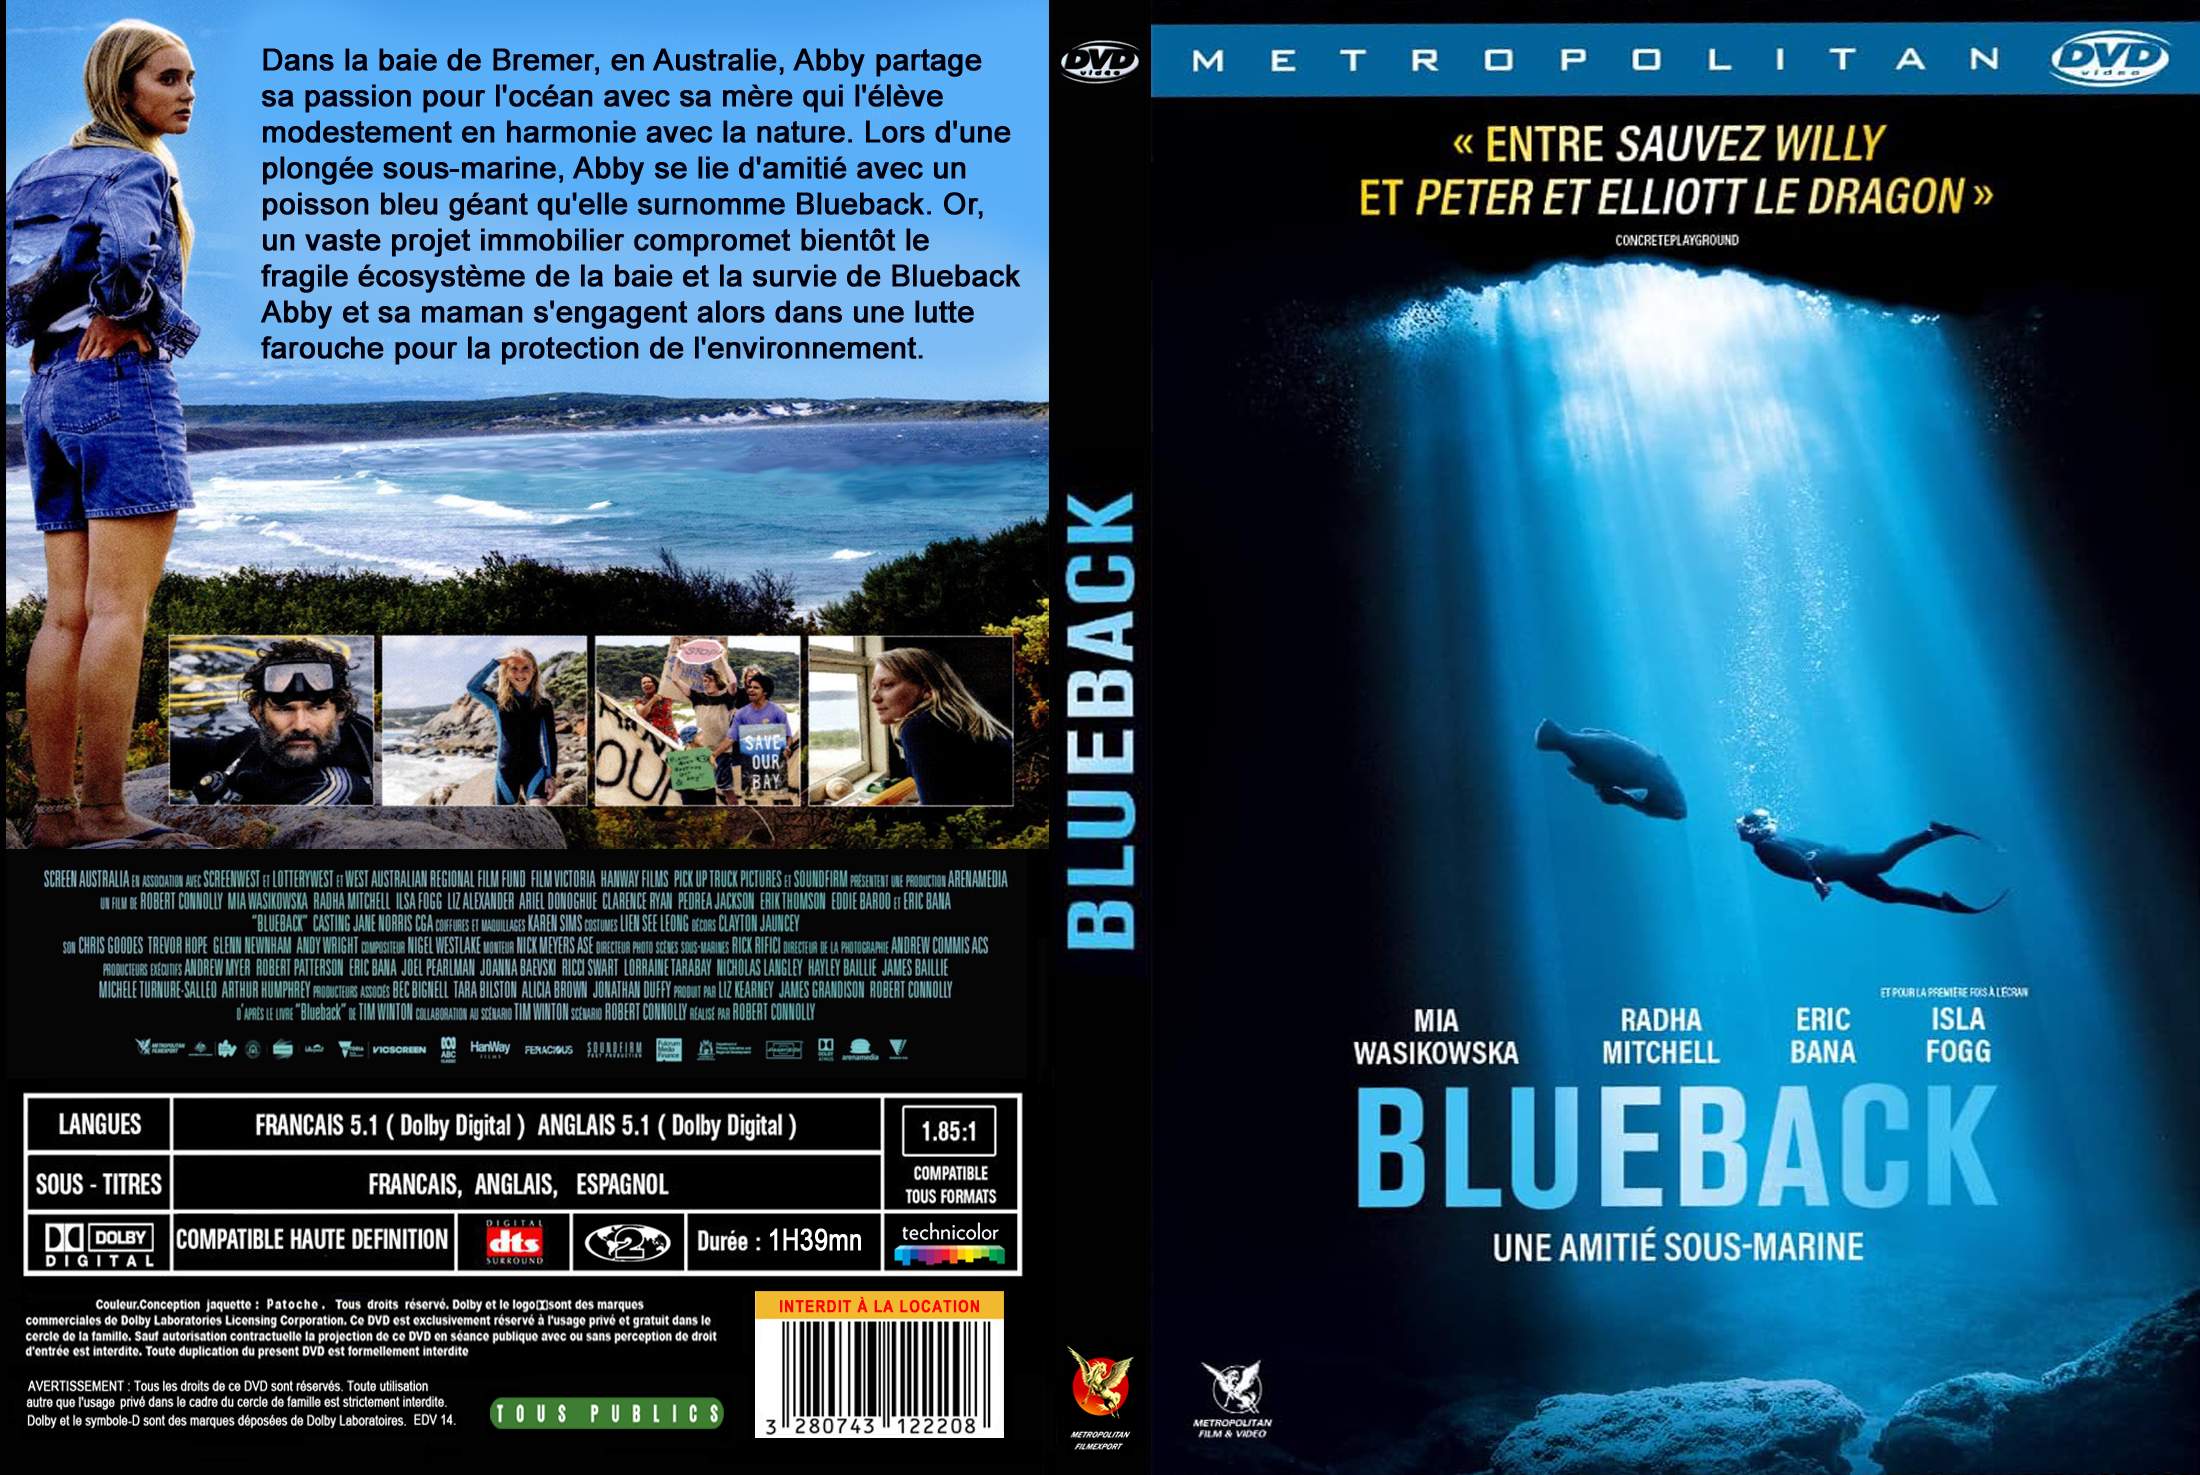 Jaquette DVD Blueback custom